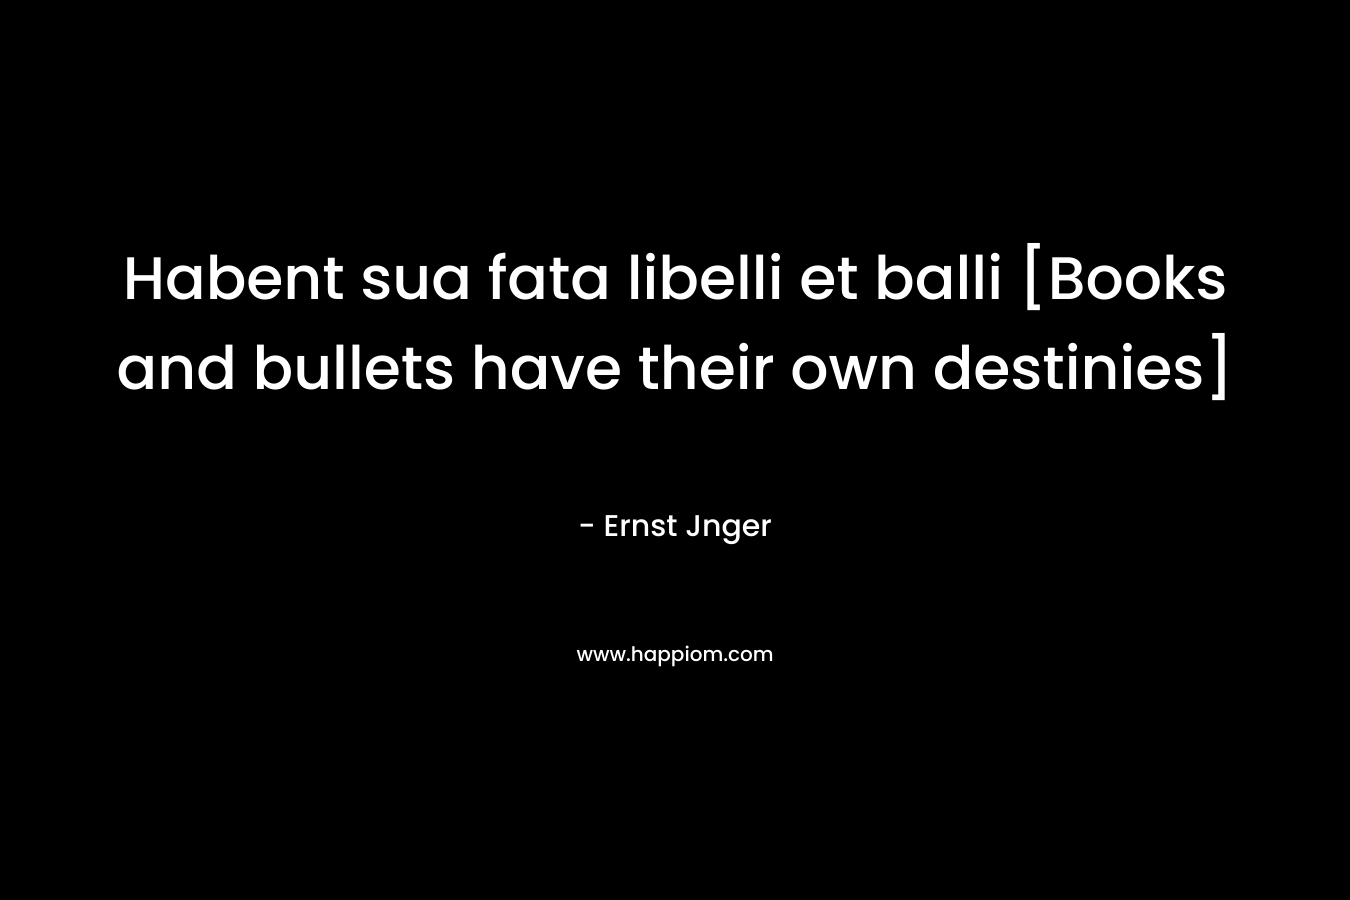 Habent sua fata libelli et balli [Books and bullets have their own destinies] – Ernst Jnger